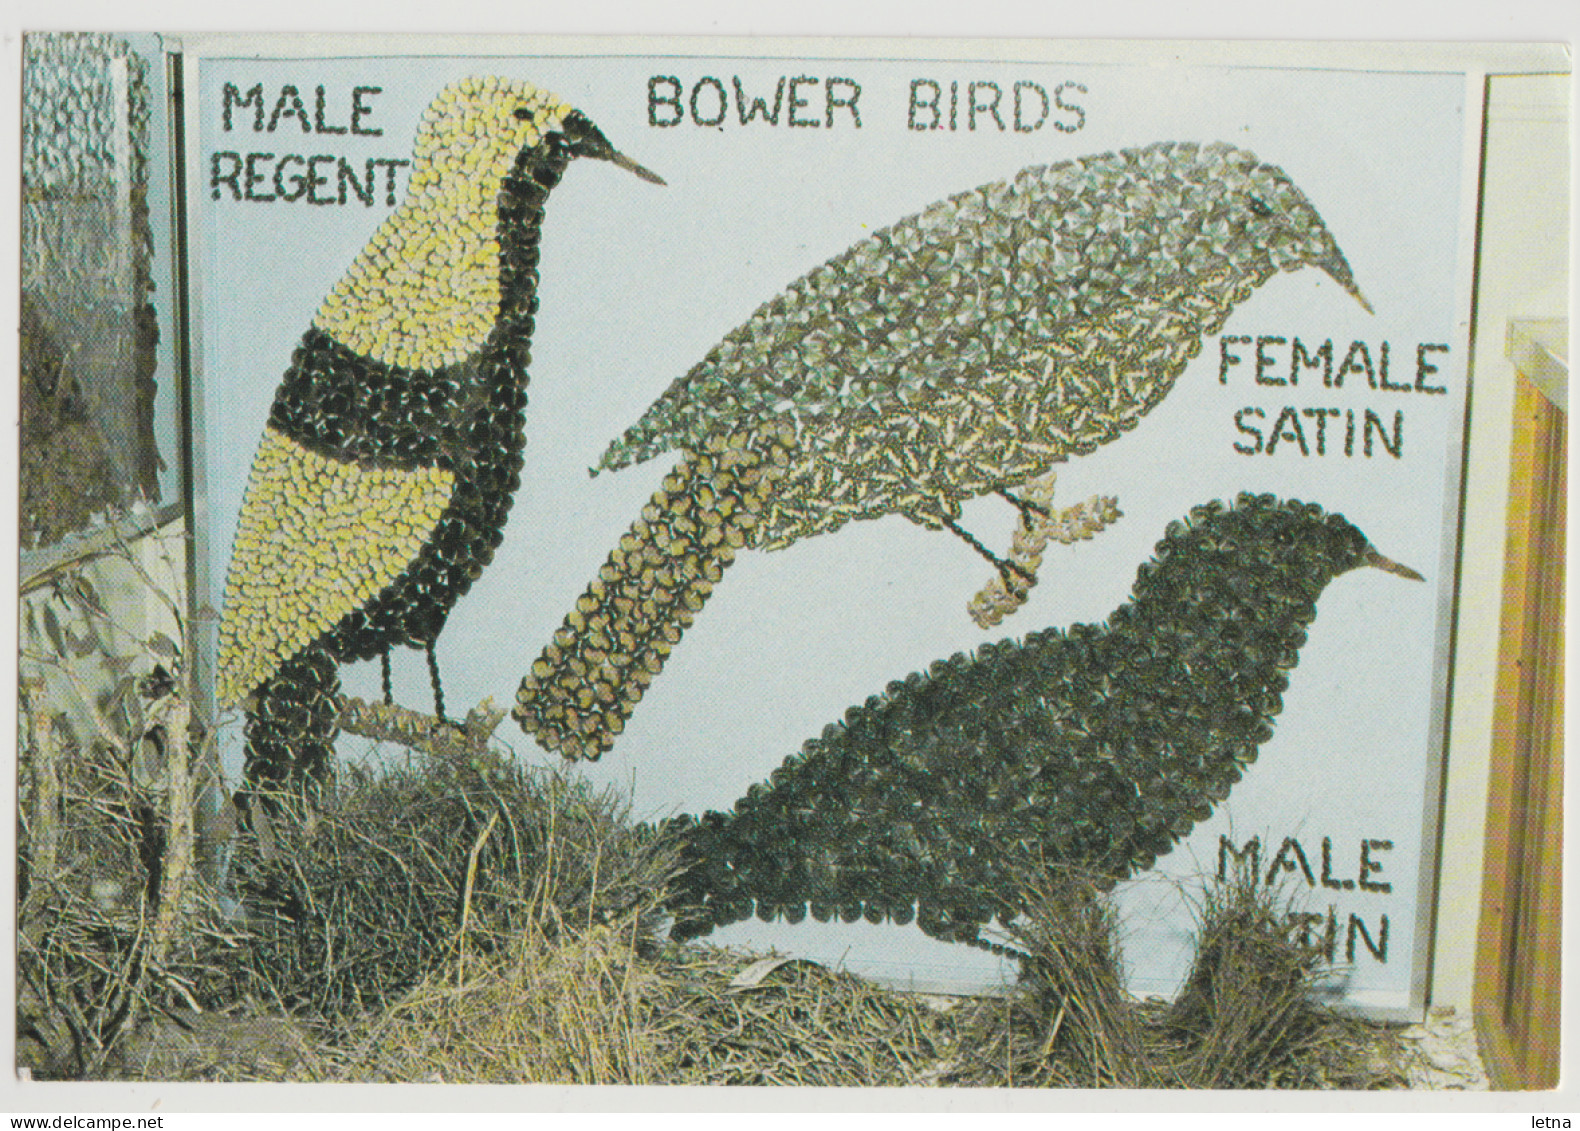 Australia QUEENSLAND Bower Bird Nature Display Made From Butterflies AYR Bolton Postcard C1970s - Far North Queensland